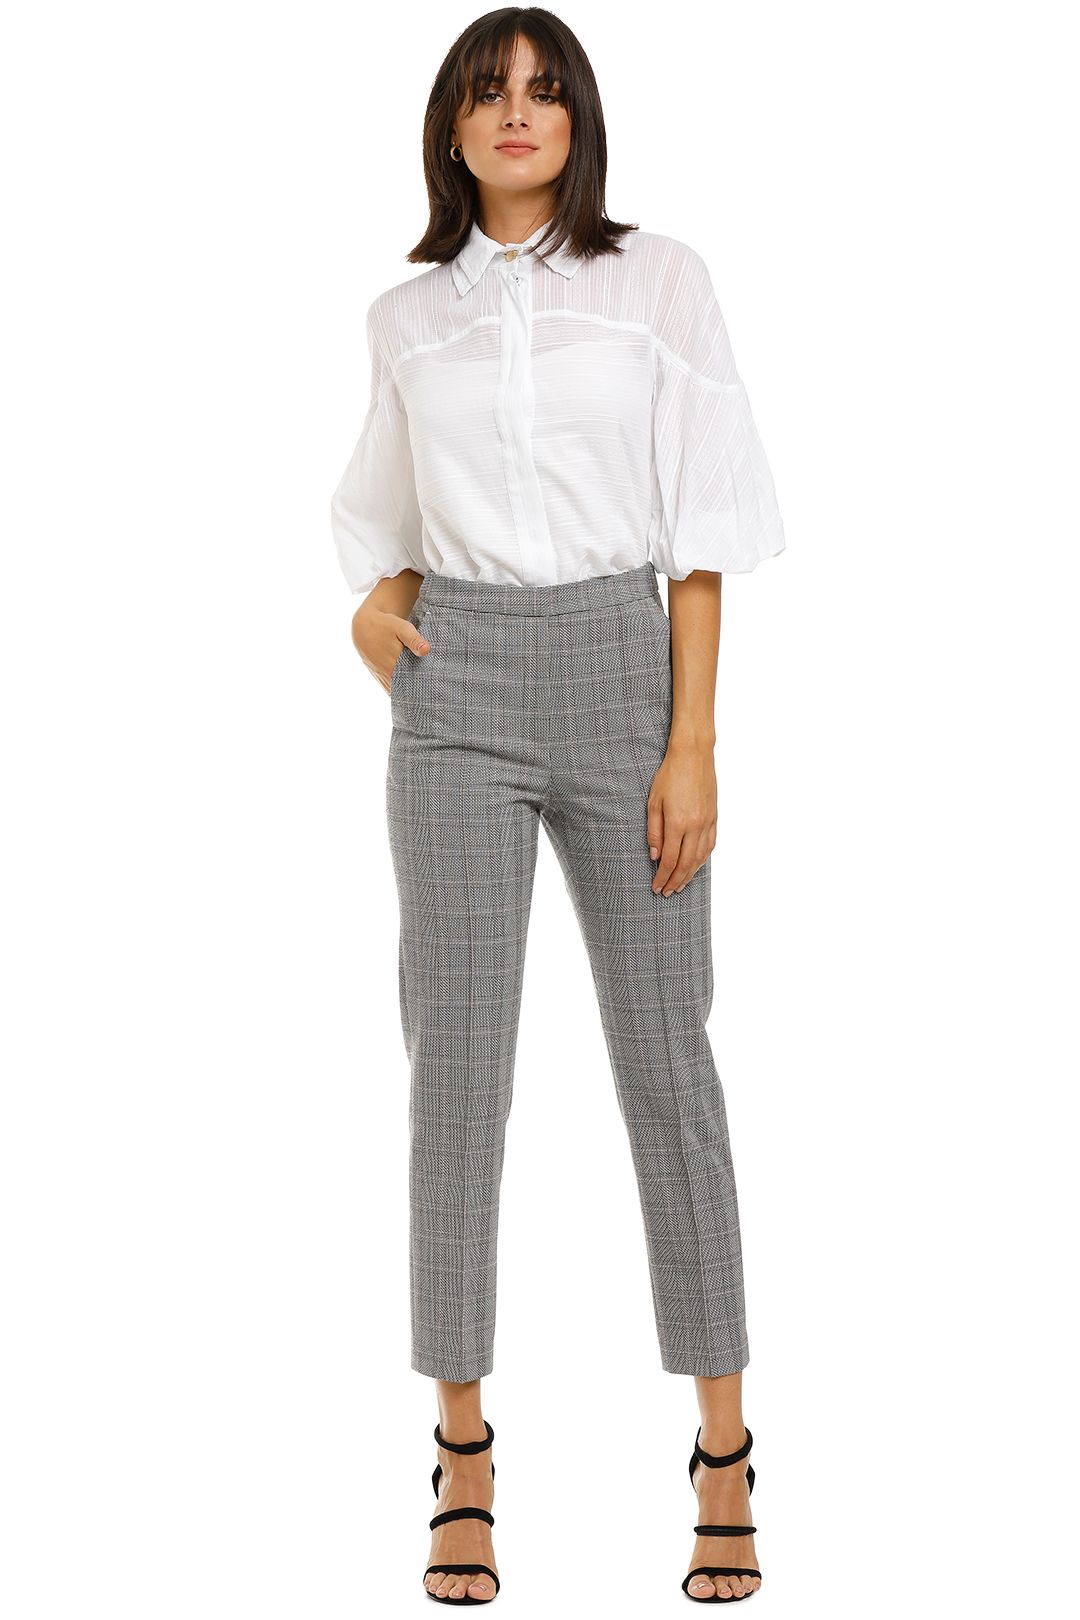 Pantaloons Women Print Grey Trousers - Selling Fast at Pantaloons.com